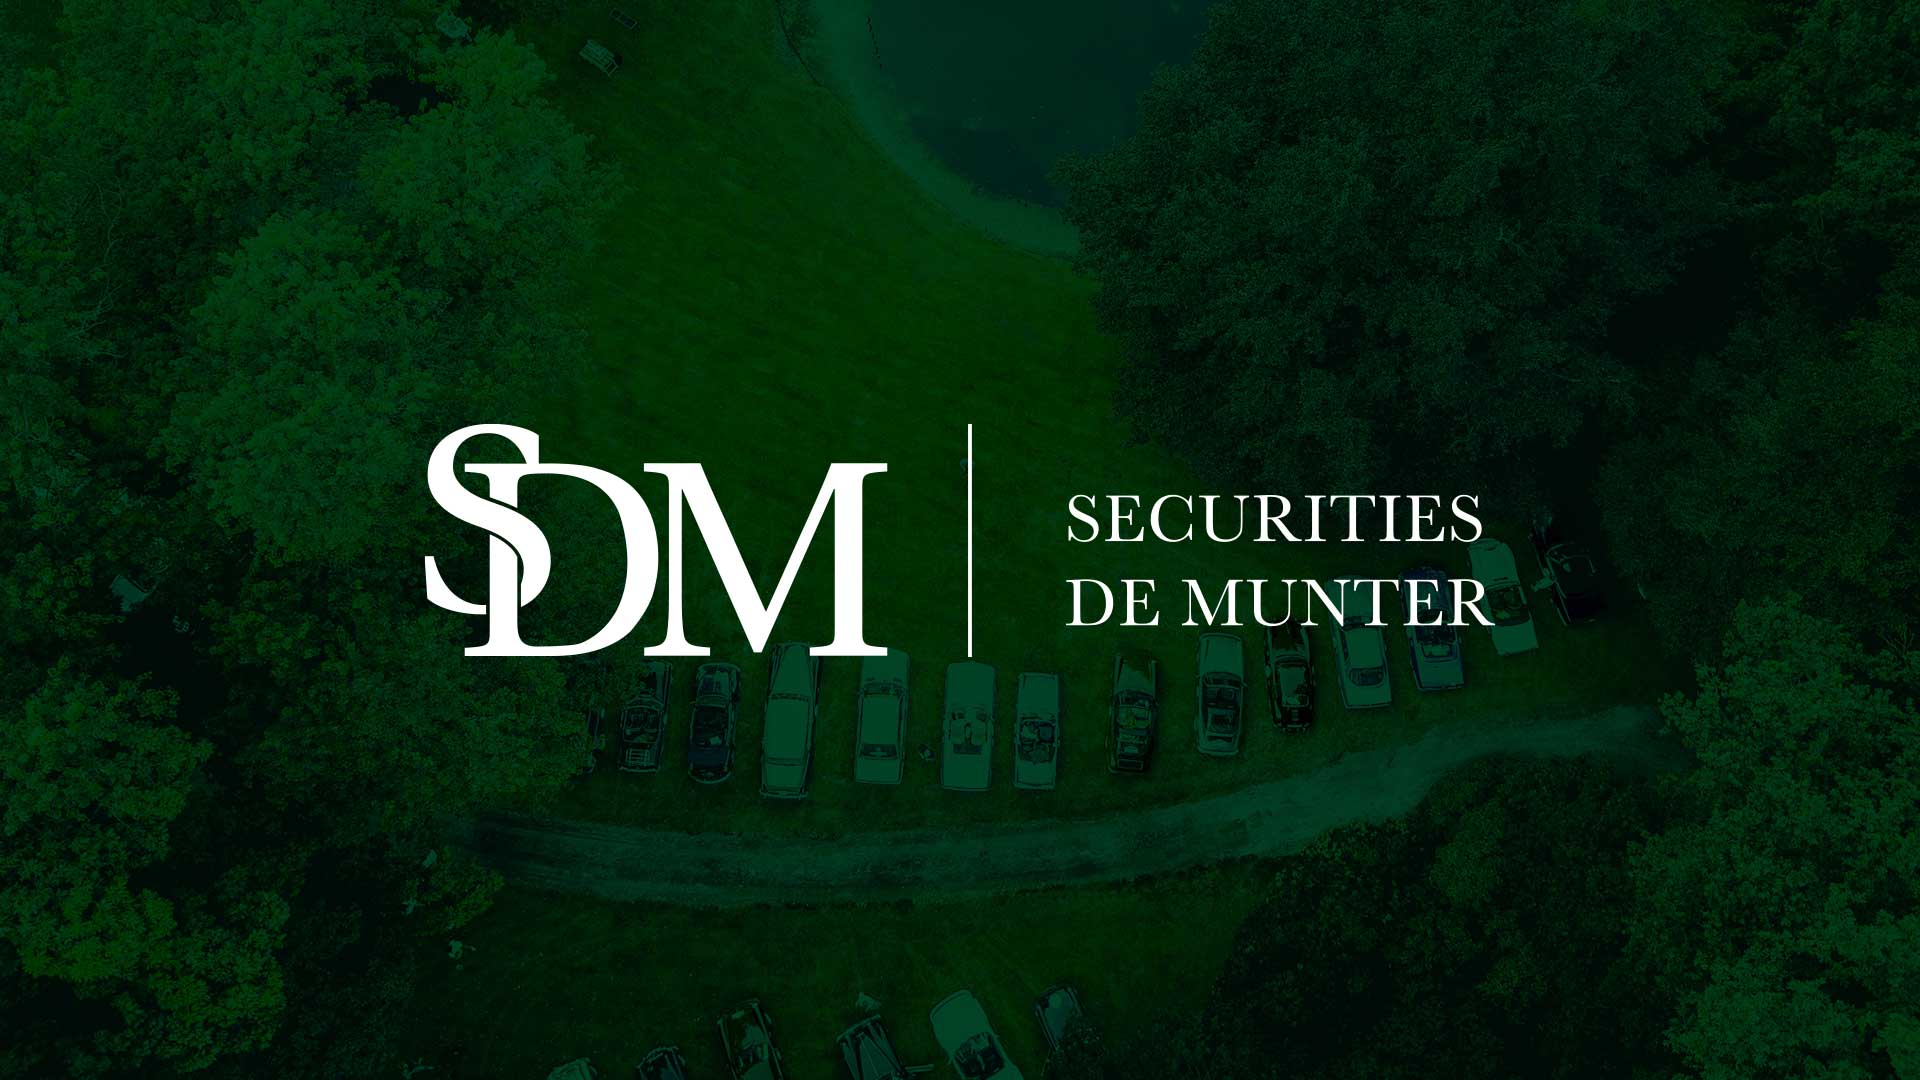 SDM Private Banking